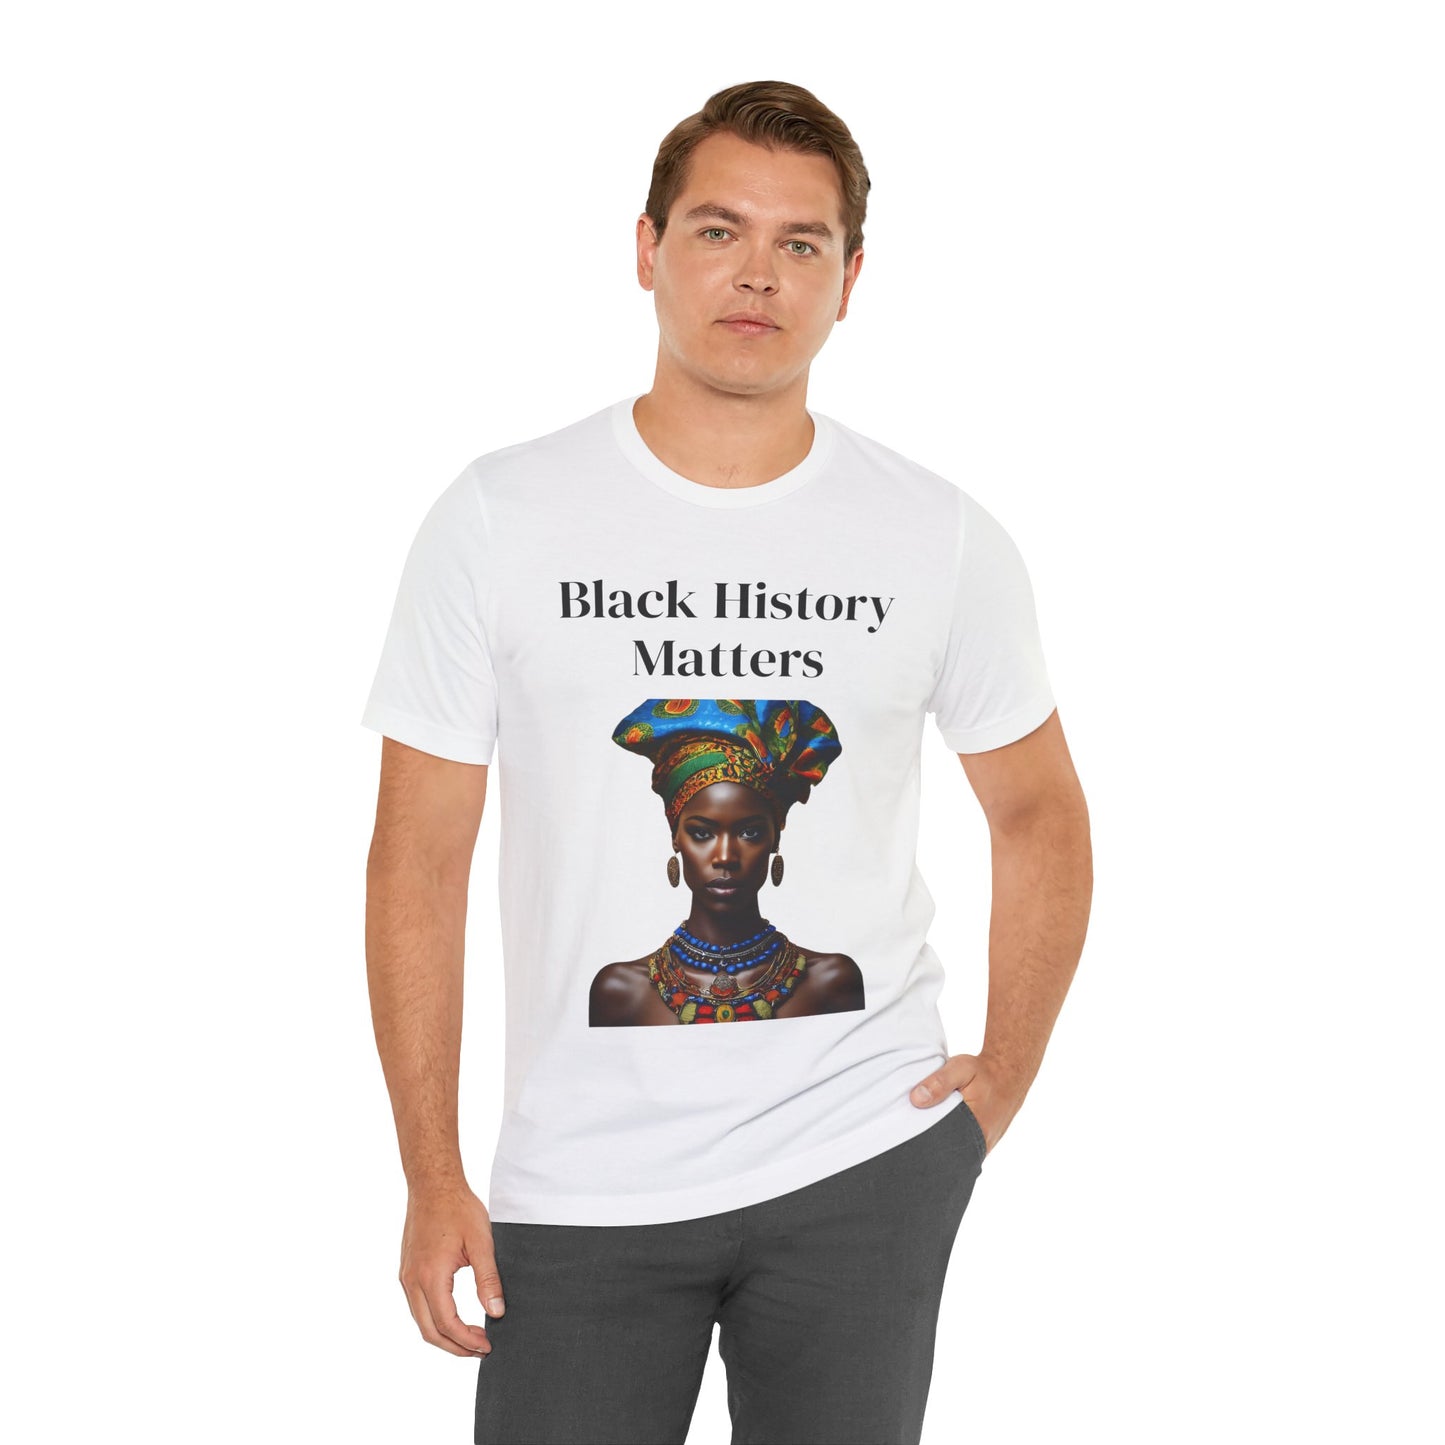 Black History Matters 2